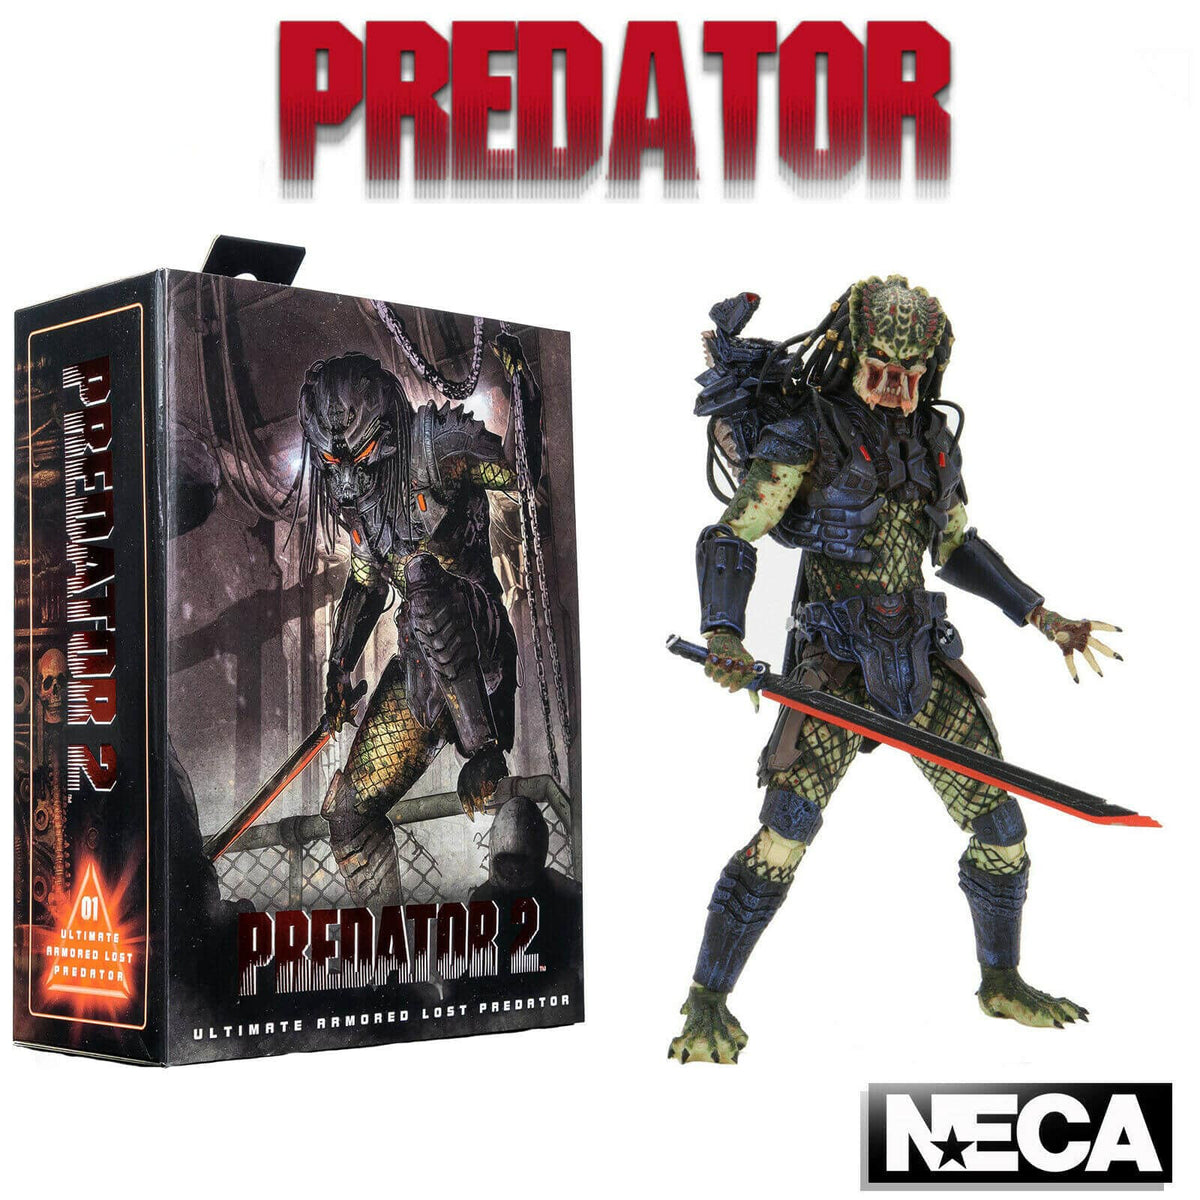 Neca: Predator 2 - Armored Lost Predator, Ultimate